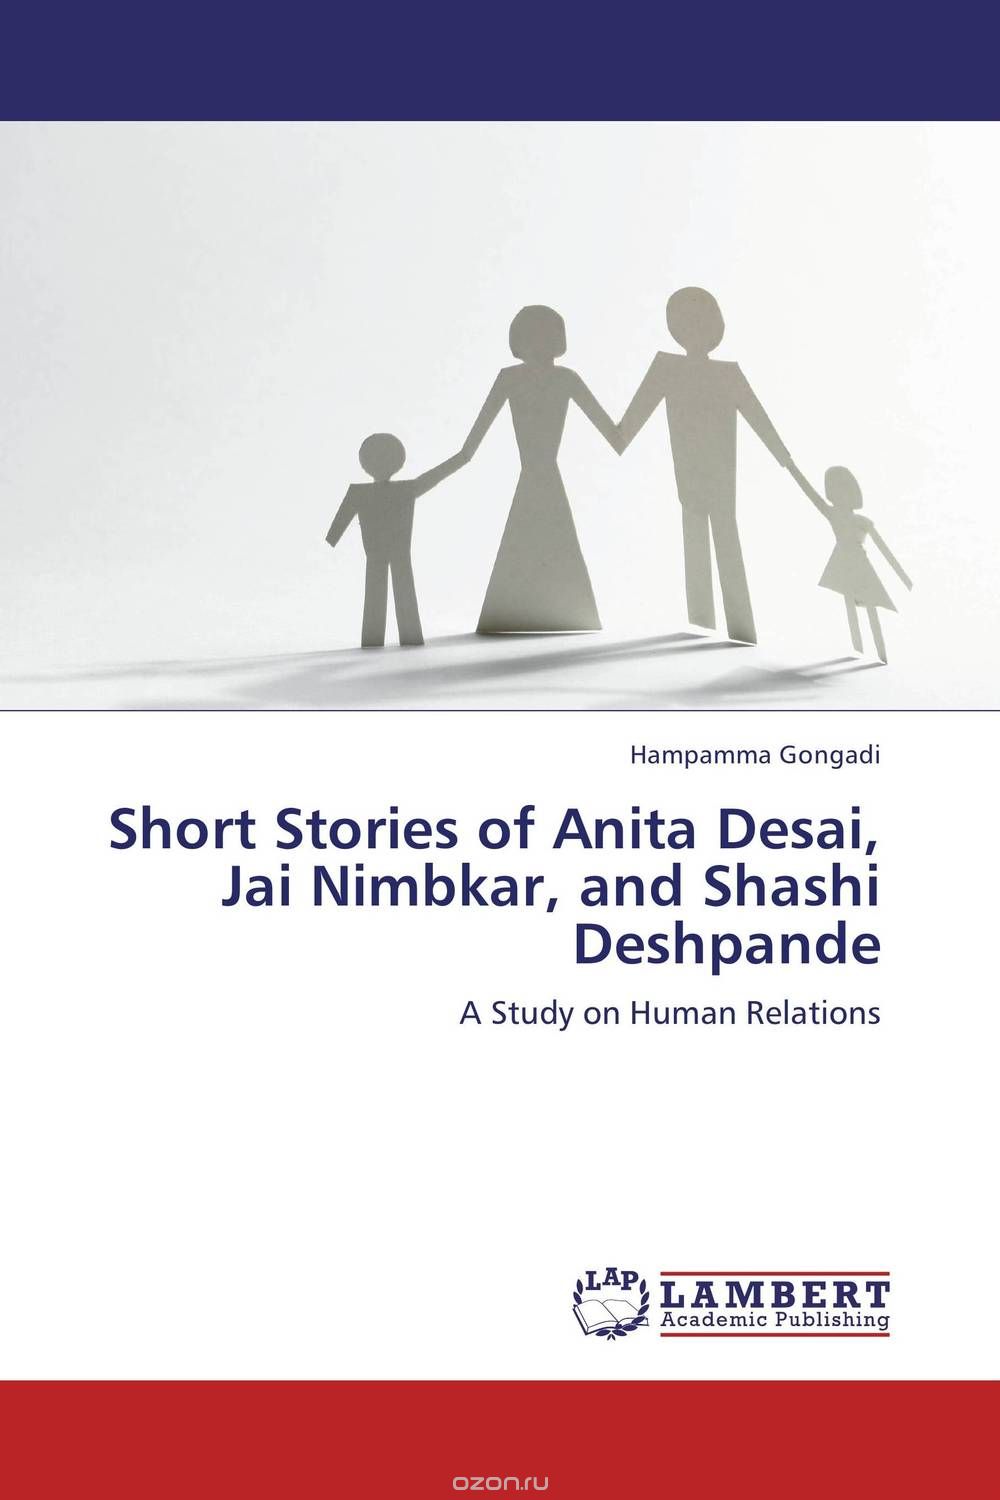 Скачать книгу "Short Stories of Anita Desai, Jai Nimbkar, and Shashi Deshpande"